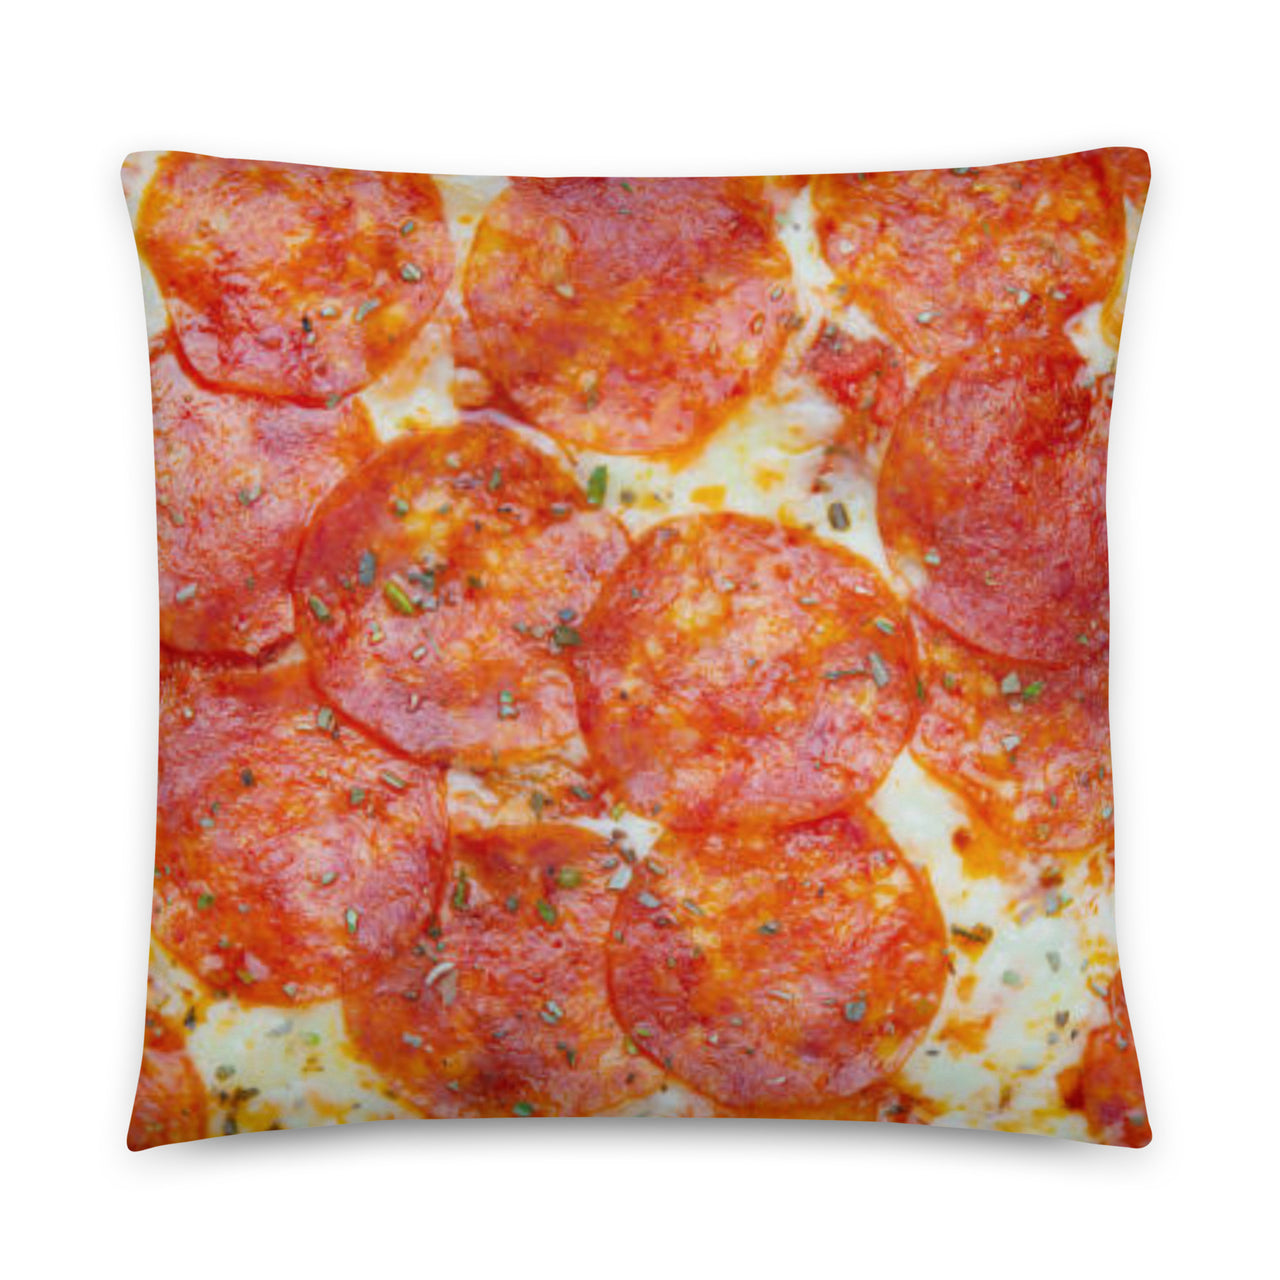 Pepperoni Pizza Pillow